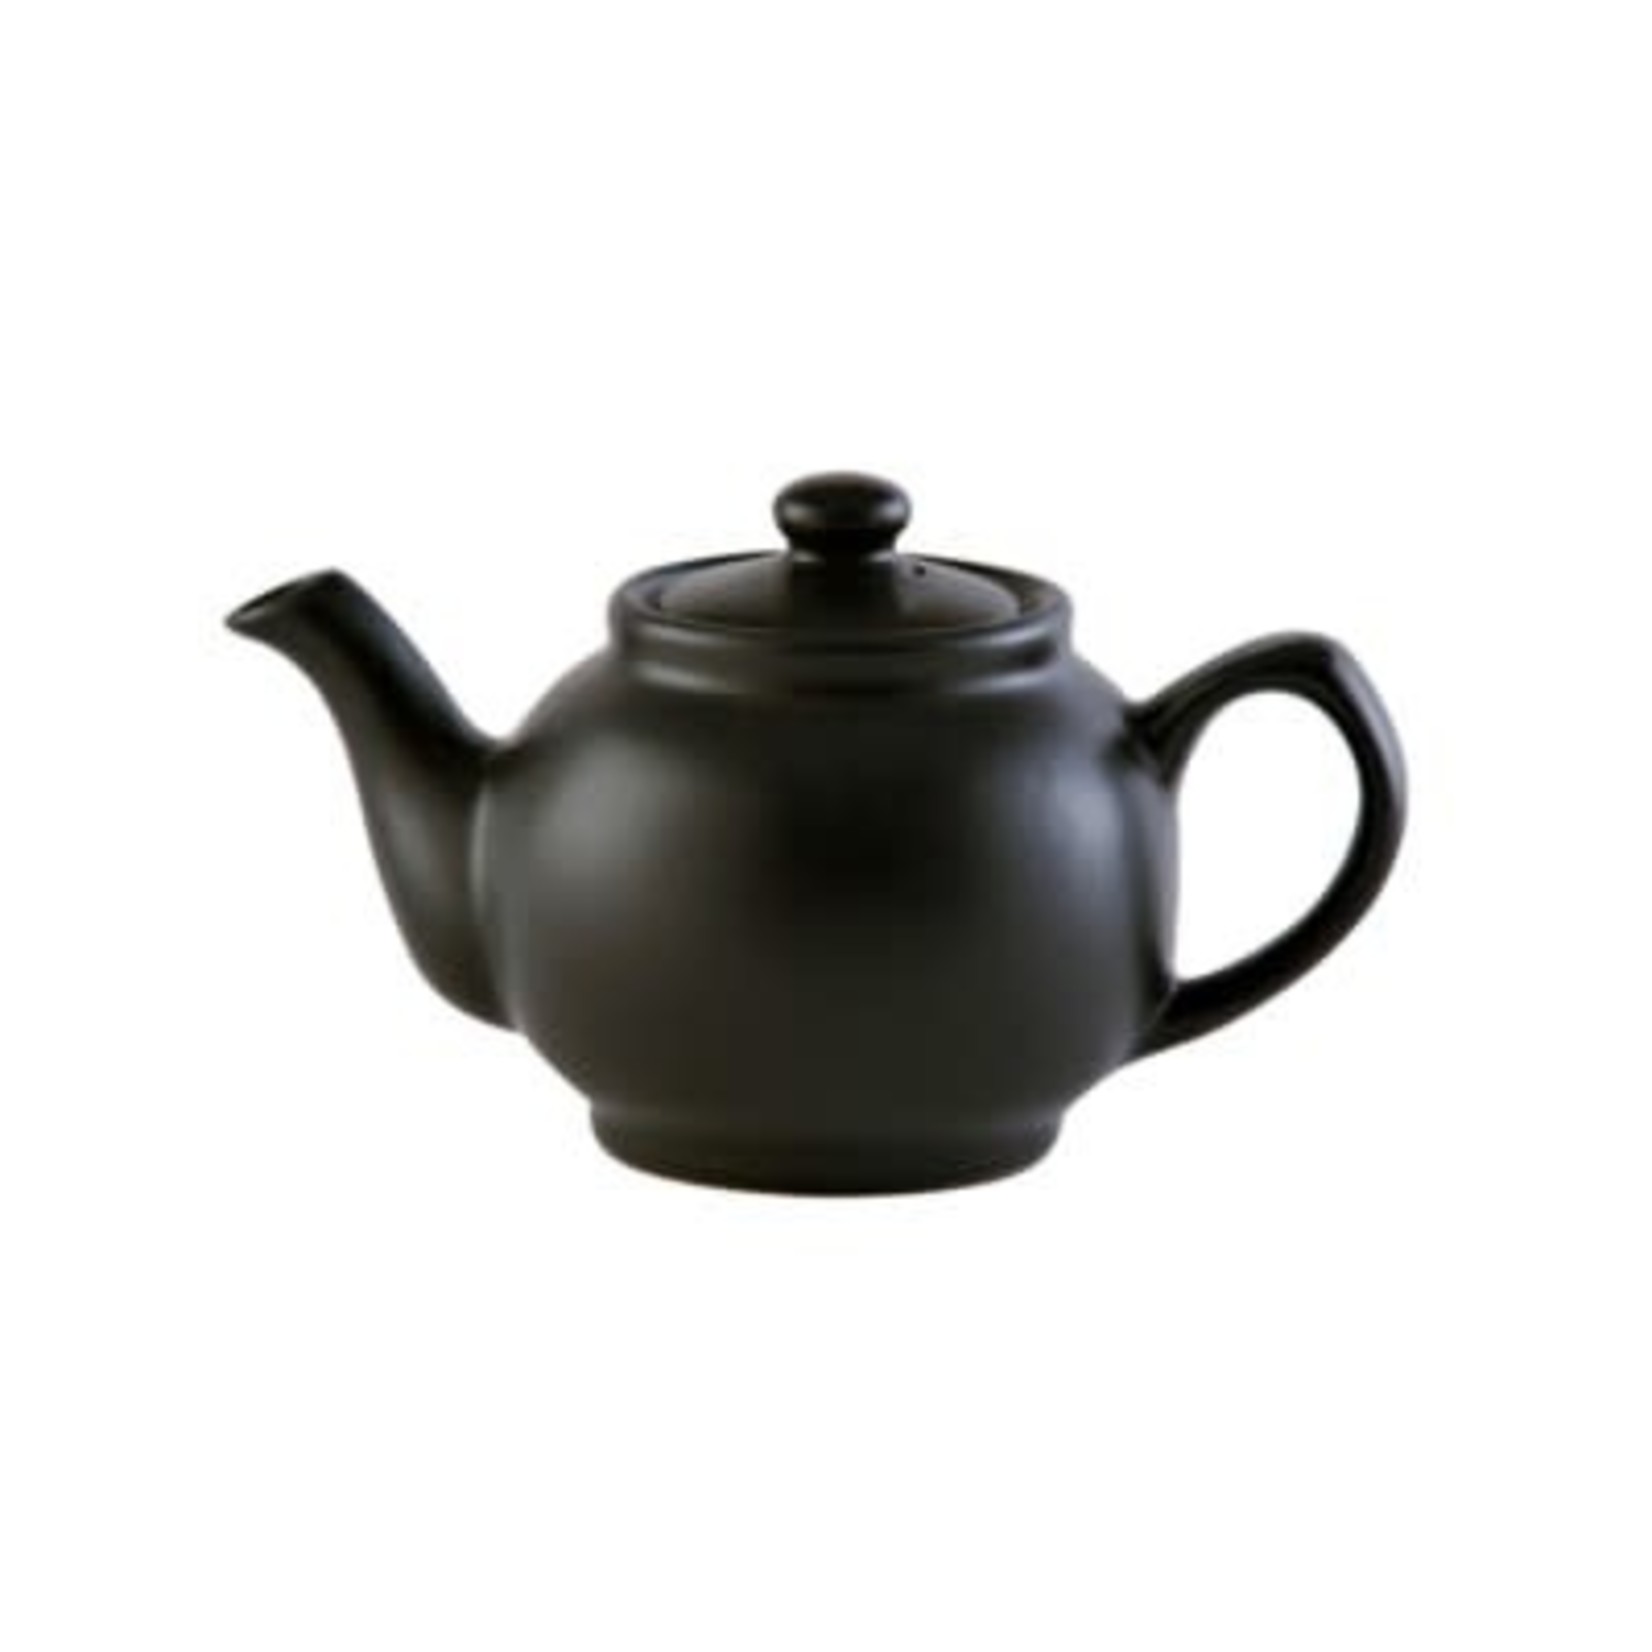 Brights Teapot Black 2 cup